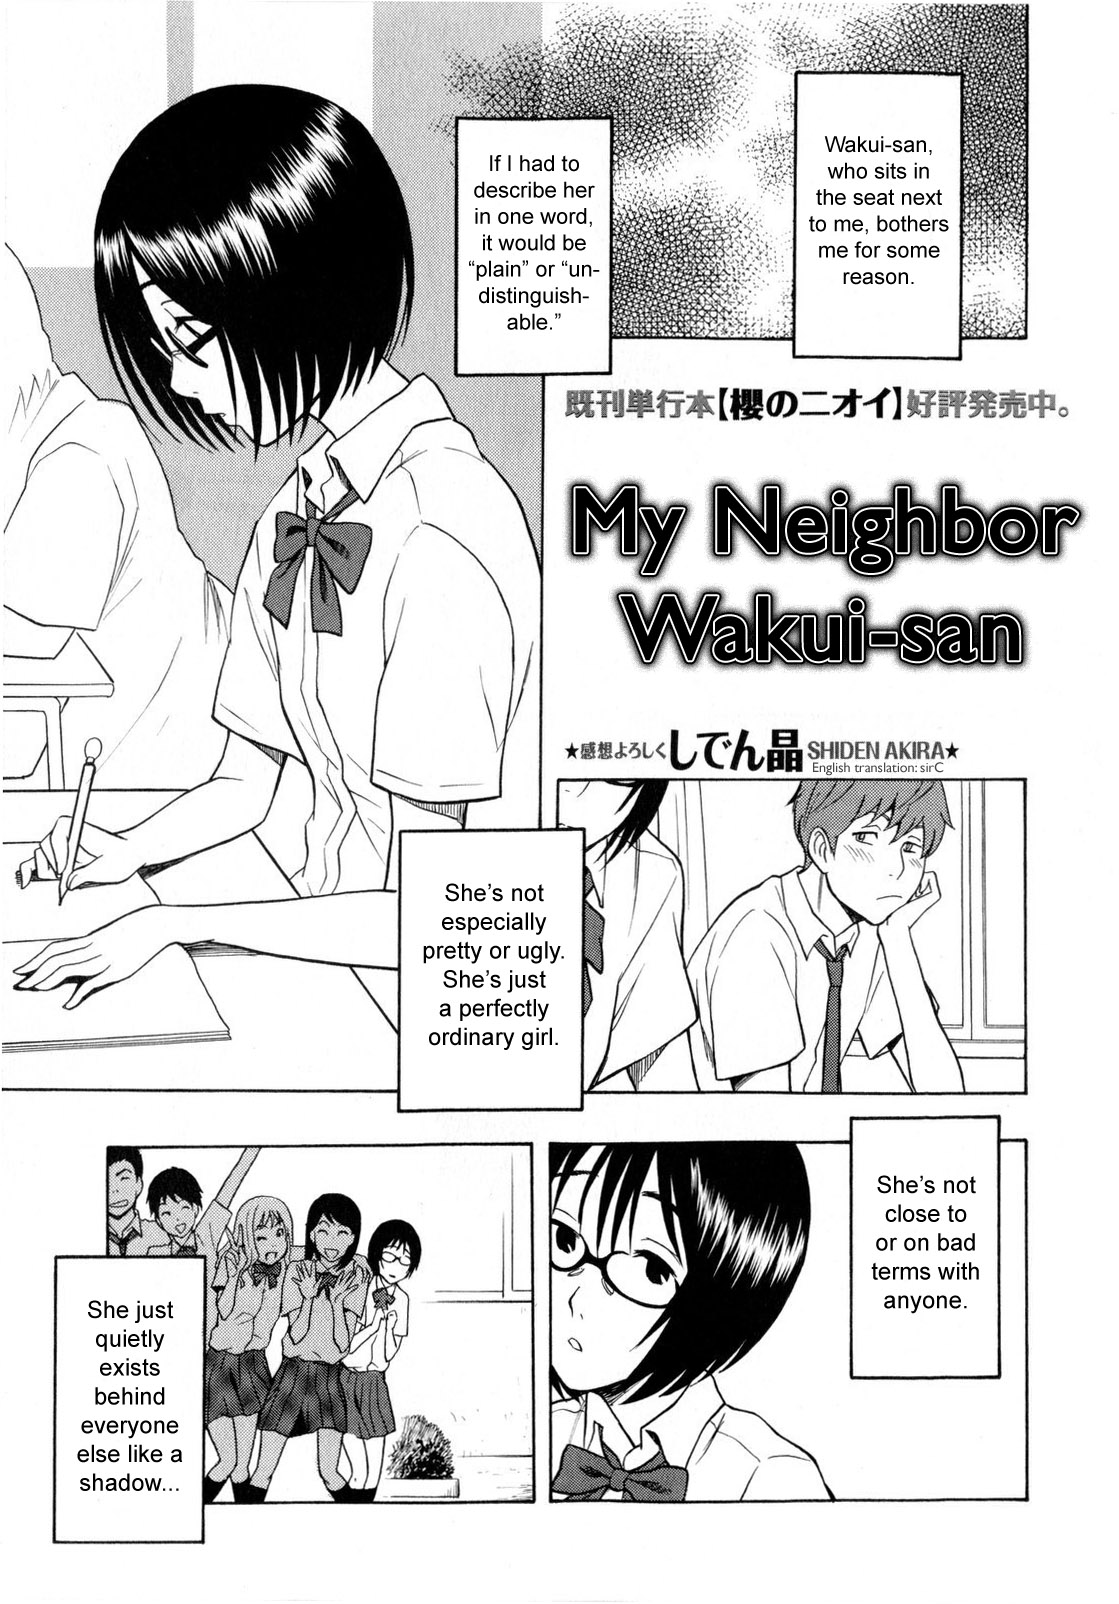 [Shiden Akira] My Neighbor Wakui-san [English] 